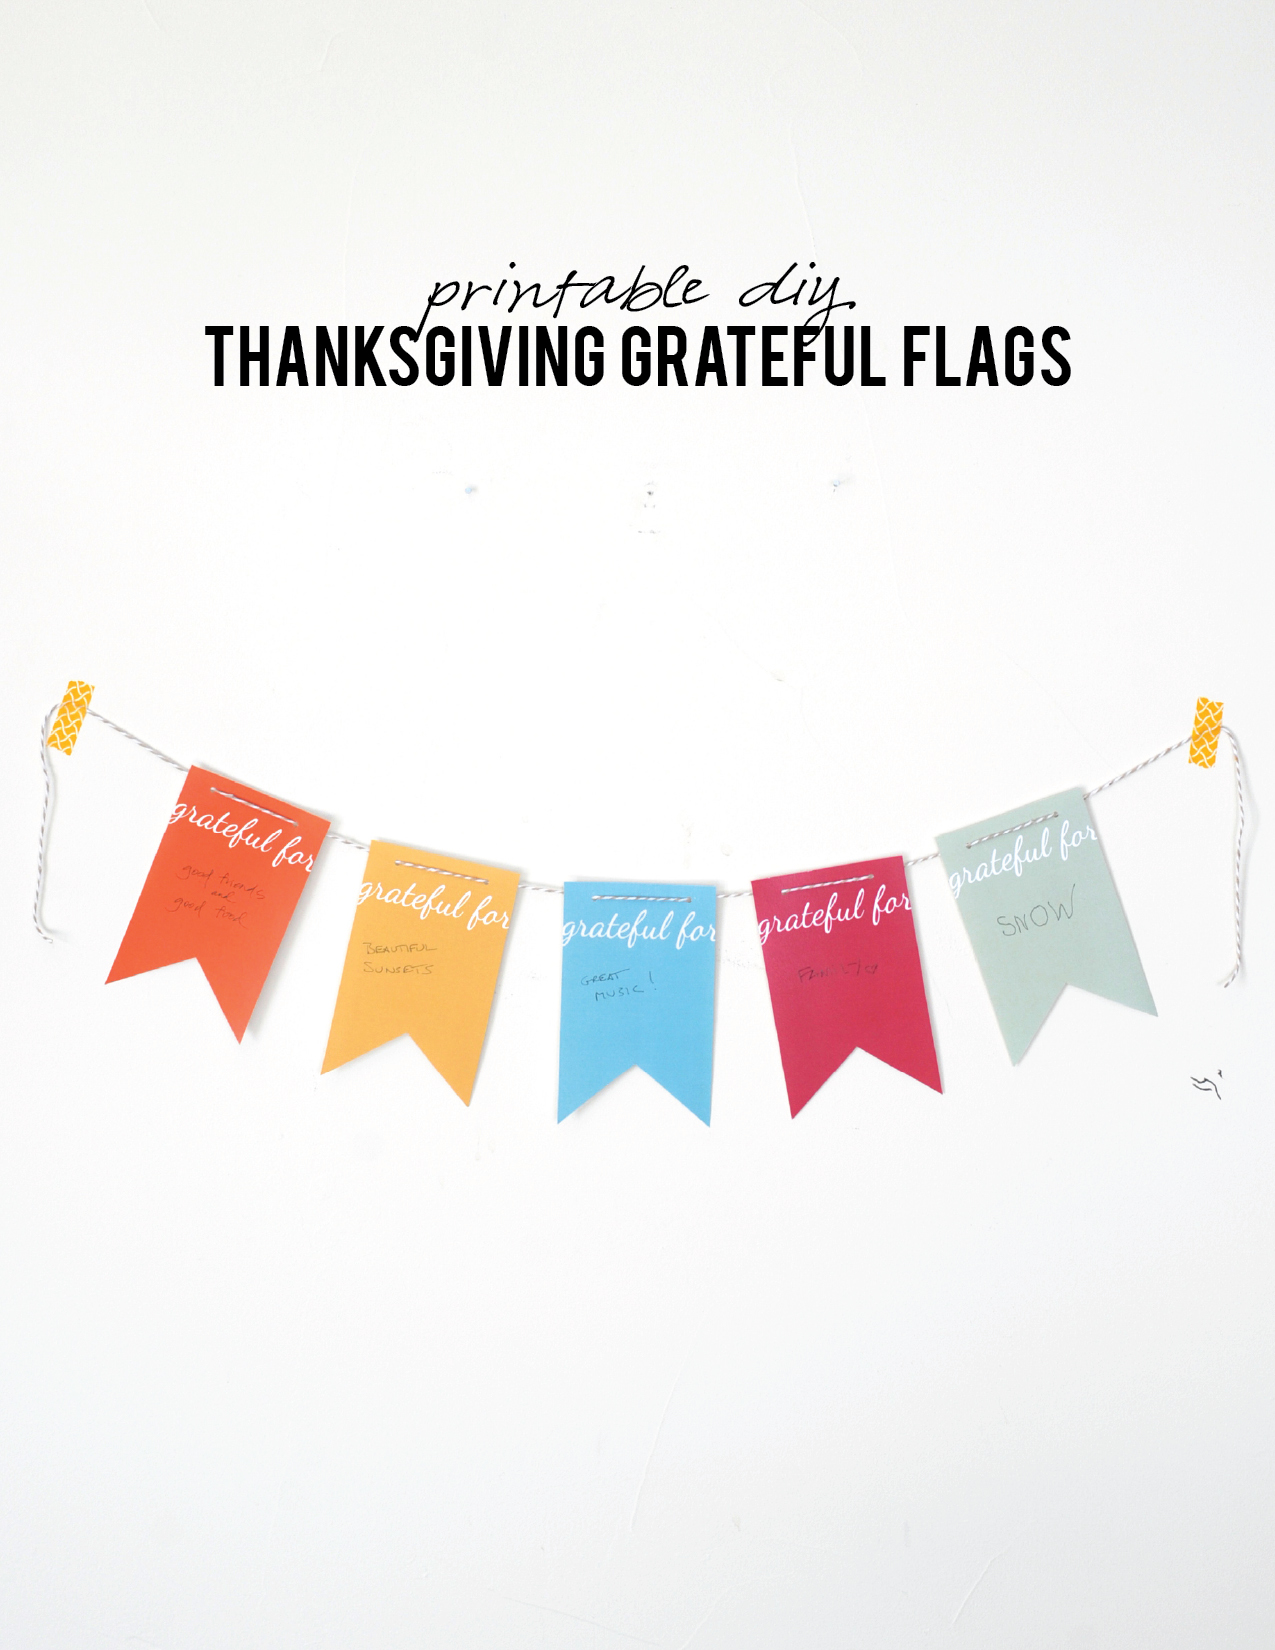 Thanksgiving printable grateful flags on aliceandlois.com alicea